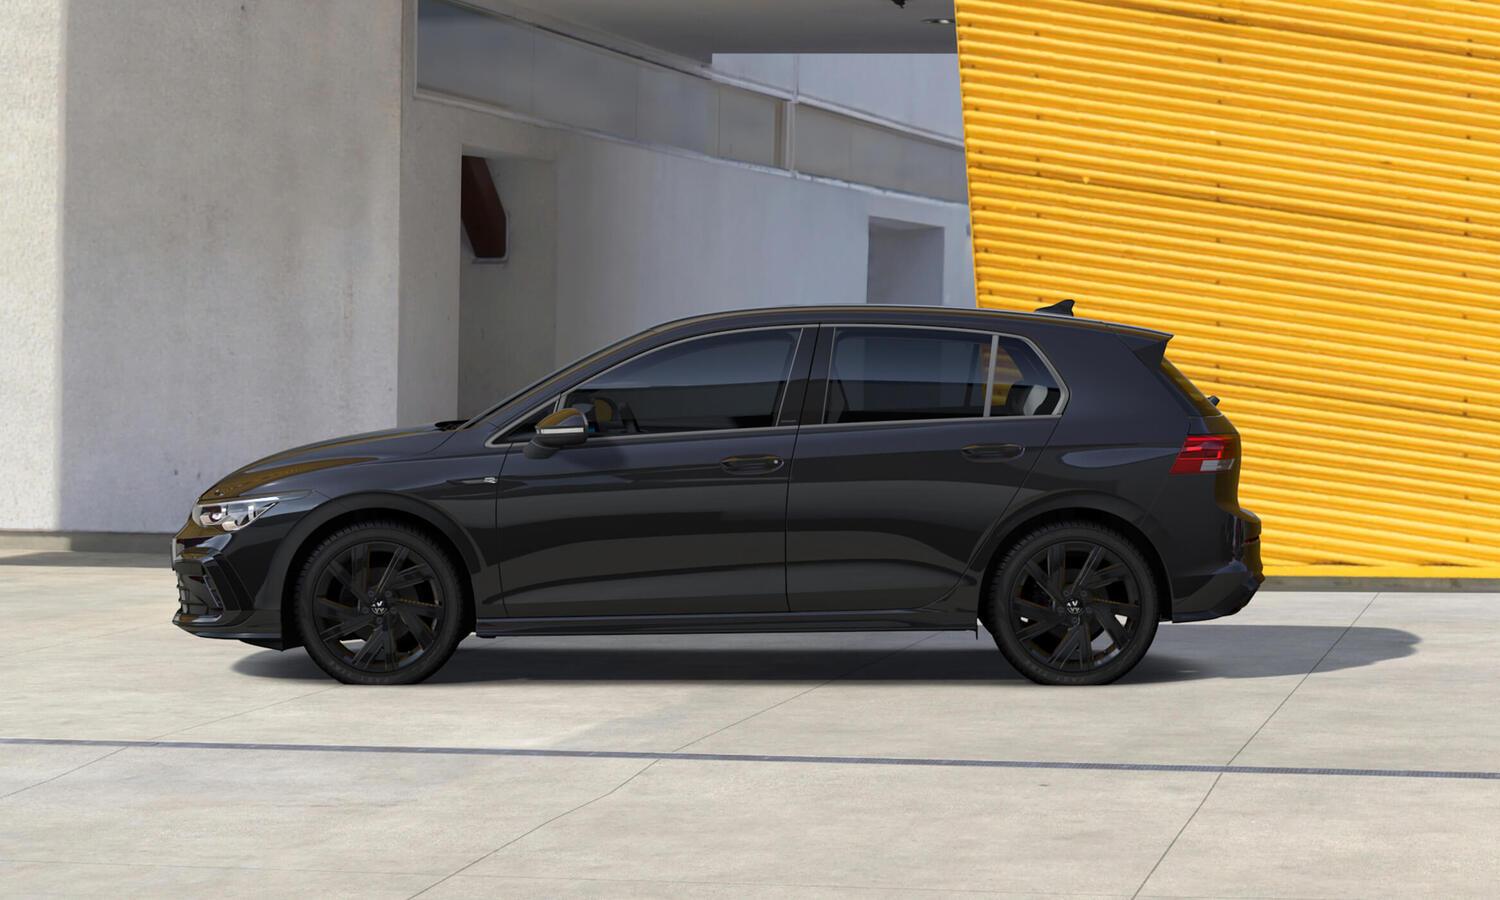 The stylish new Volkswagen Golf Black Edition offers eye 2